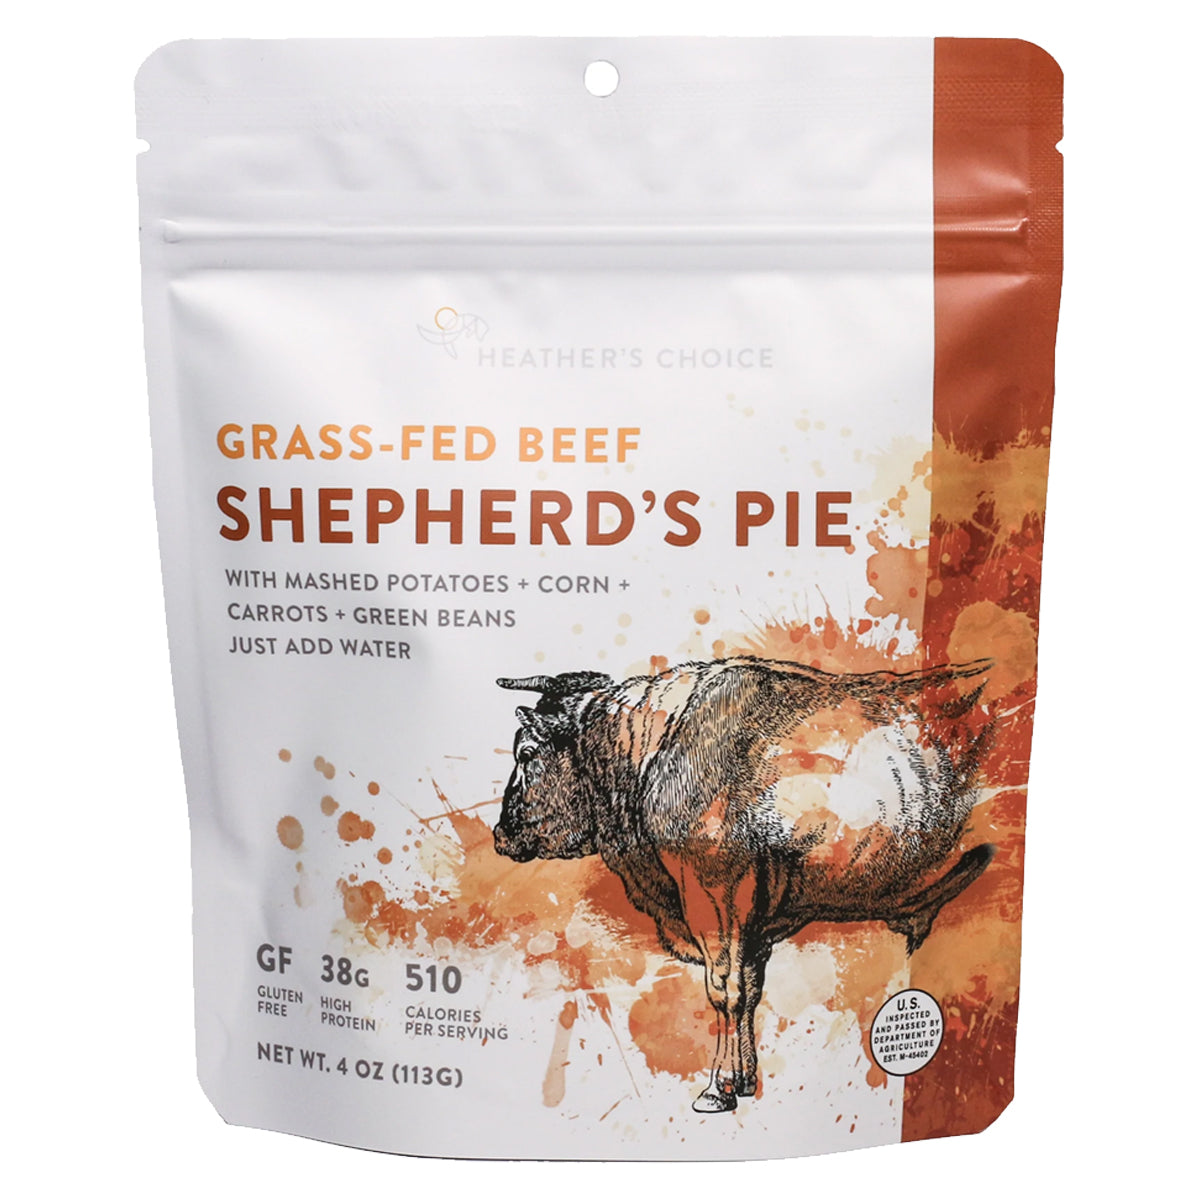 Heather's Choice Grass-Fed Beef Shepherd's Pie Dinner